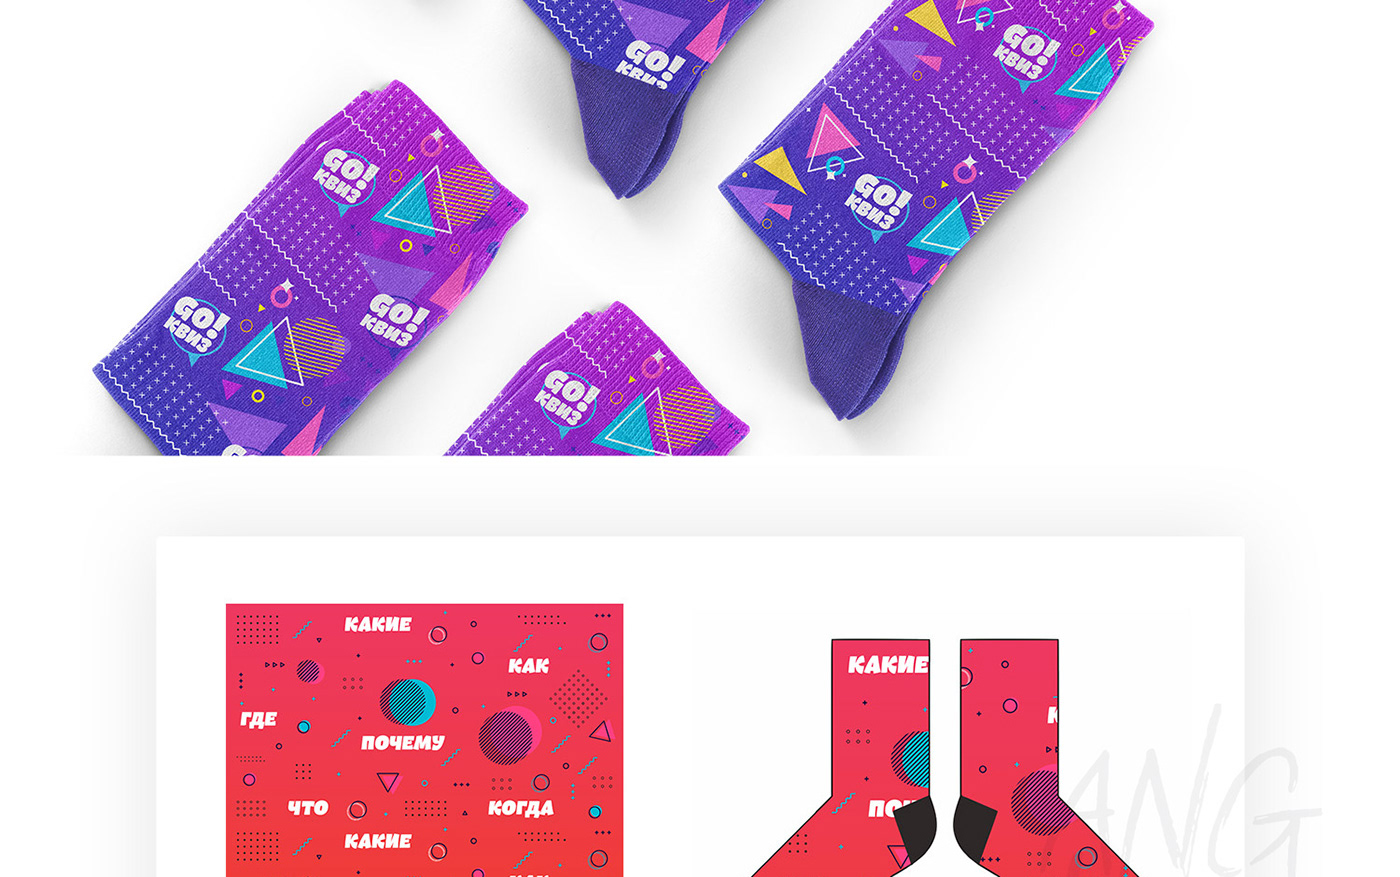 game quiz pattern Quiz socks socks design Socks design game дизайн носков носки паттерн